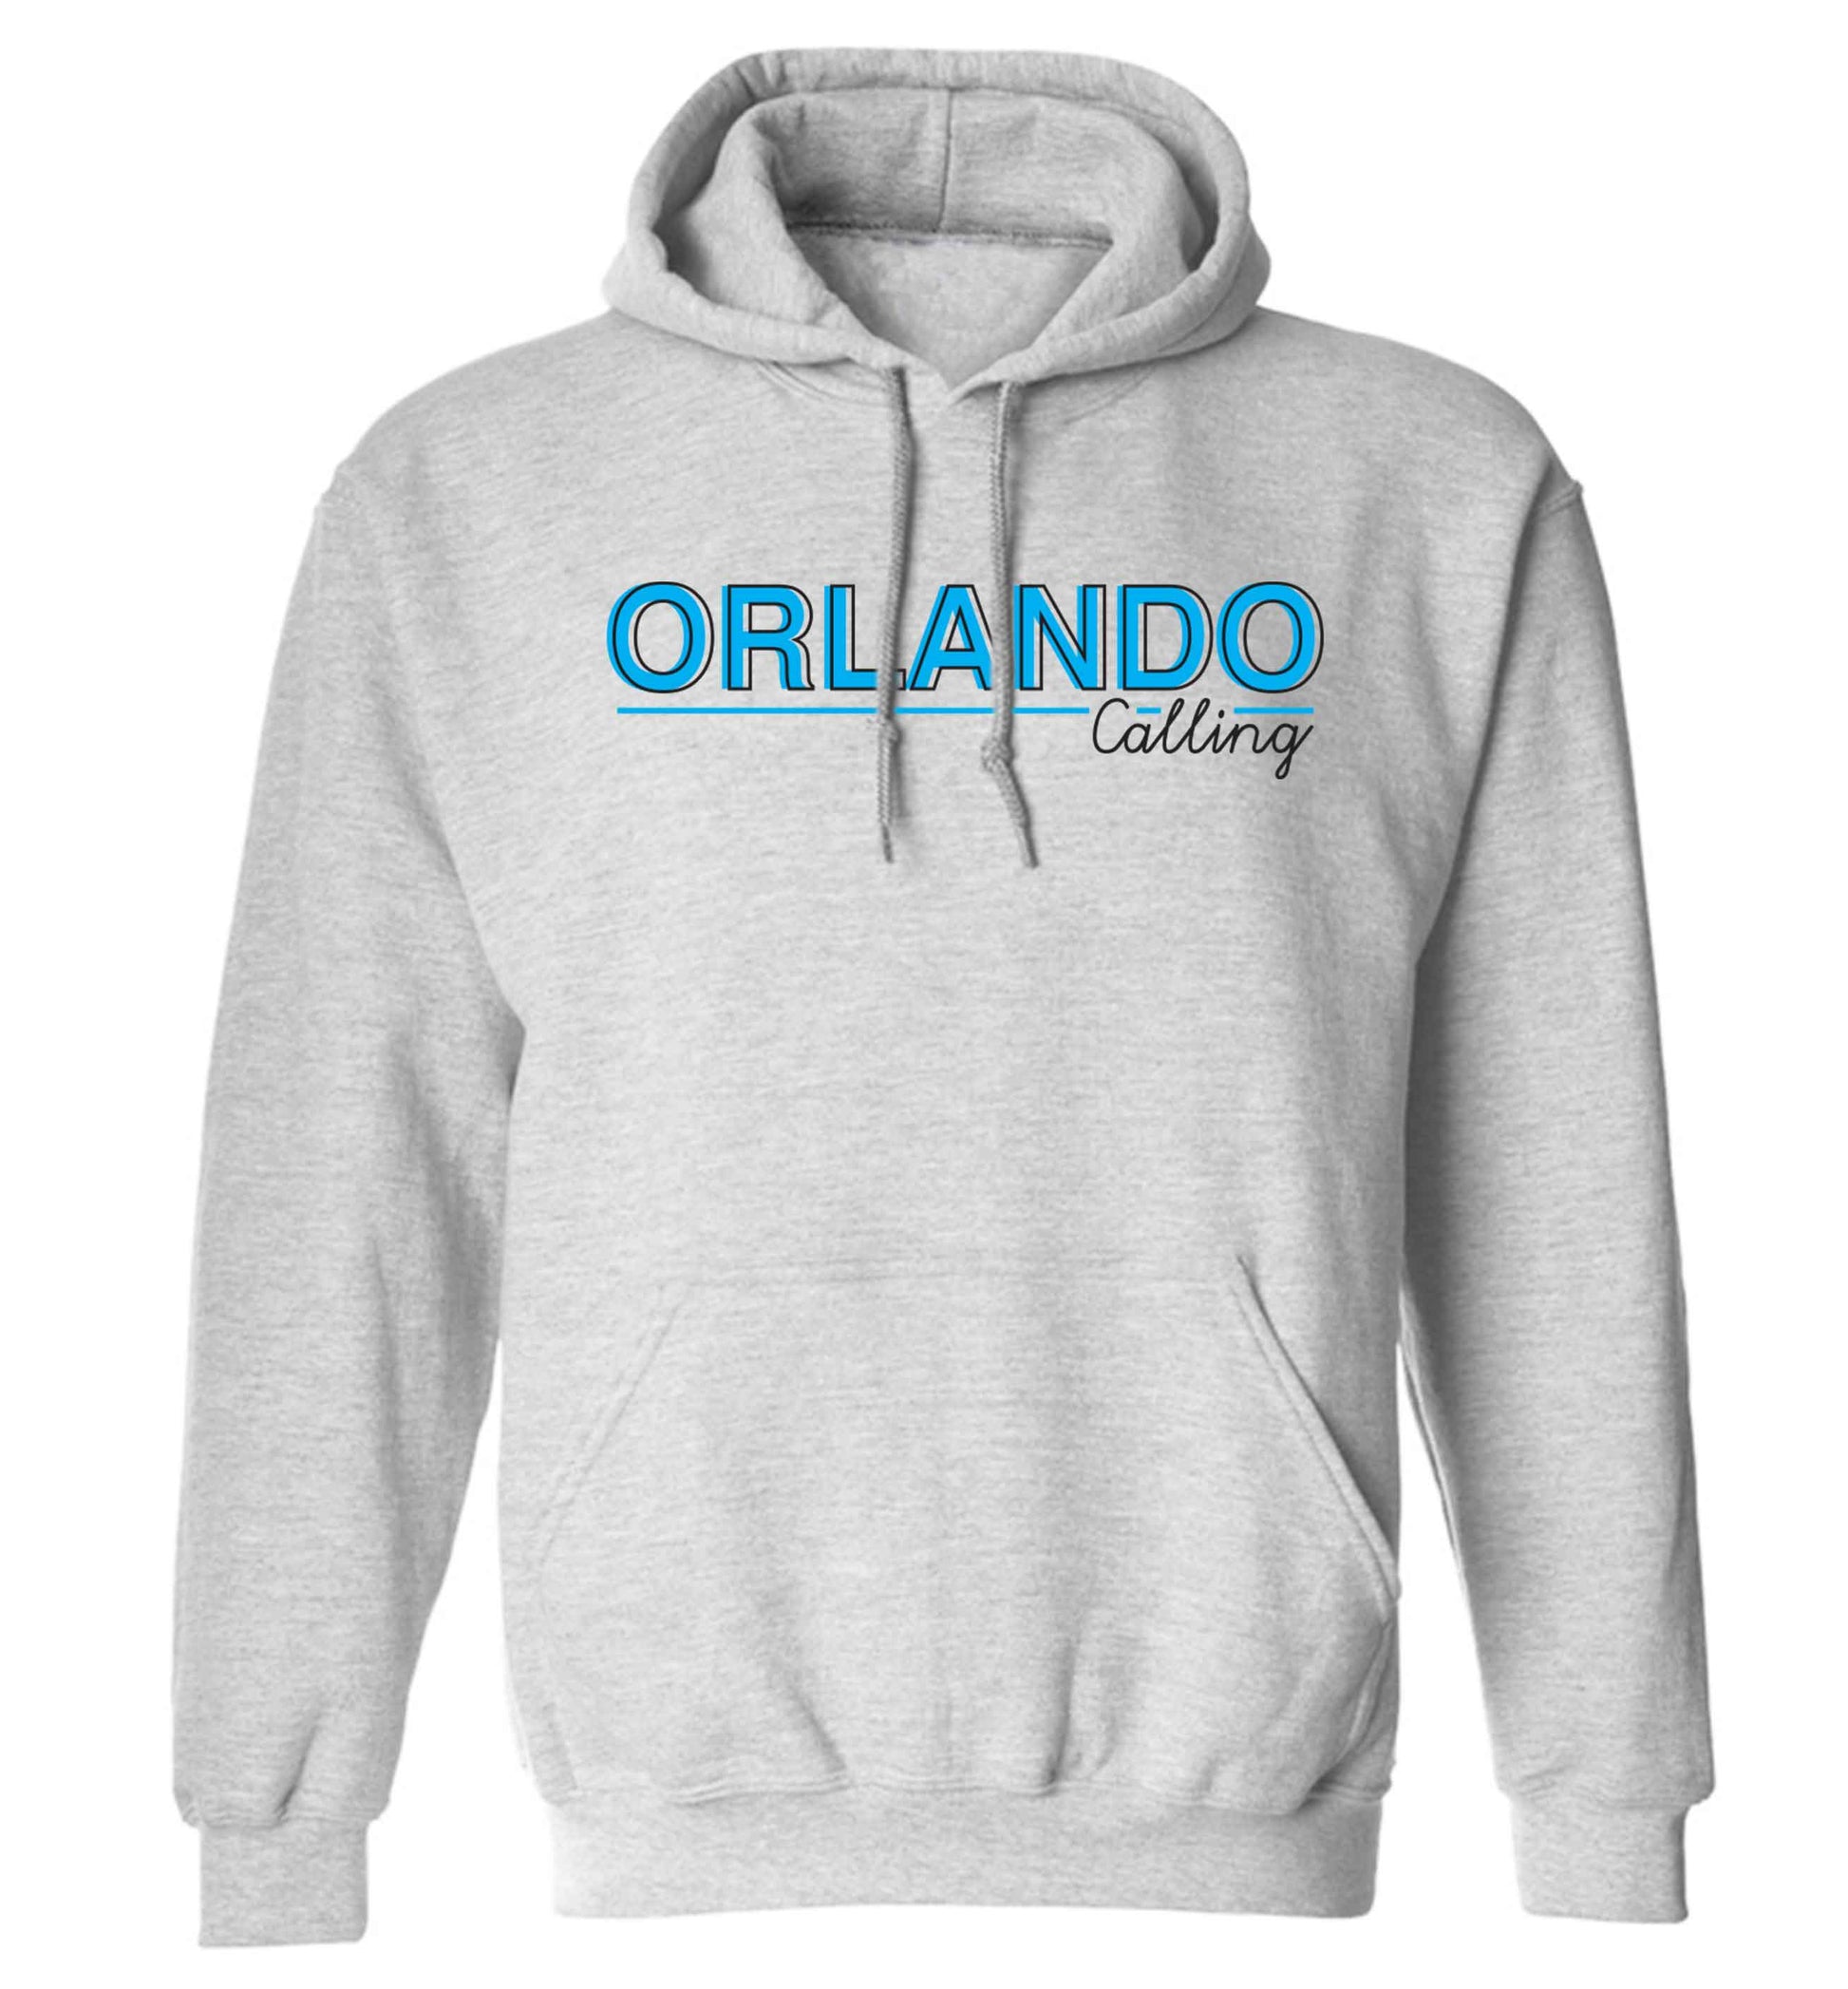 Orlando calling adults unisex grey hoodie 2XL